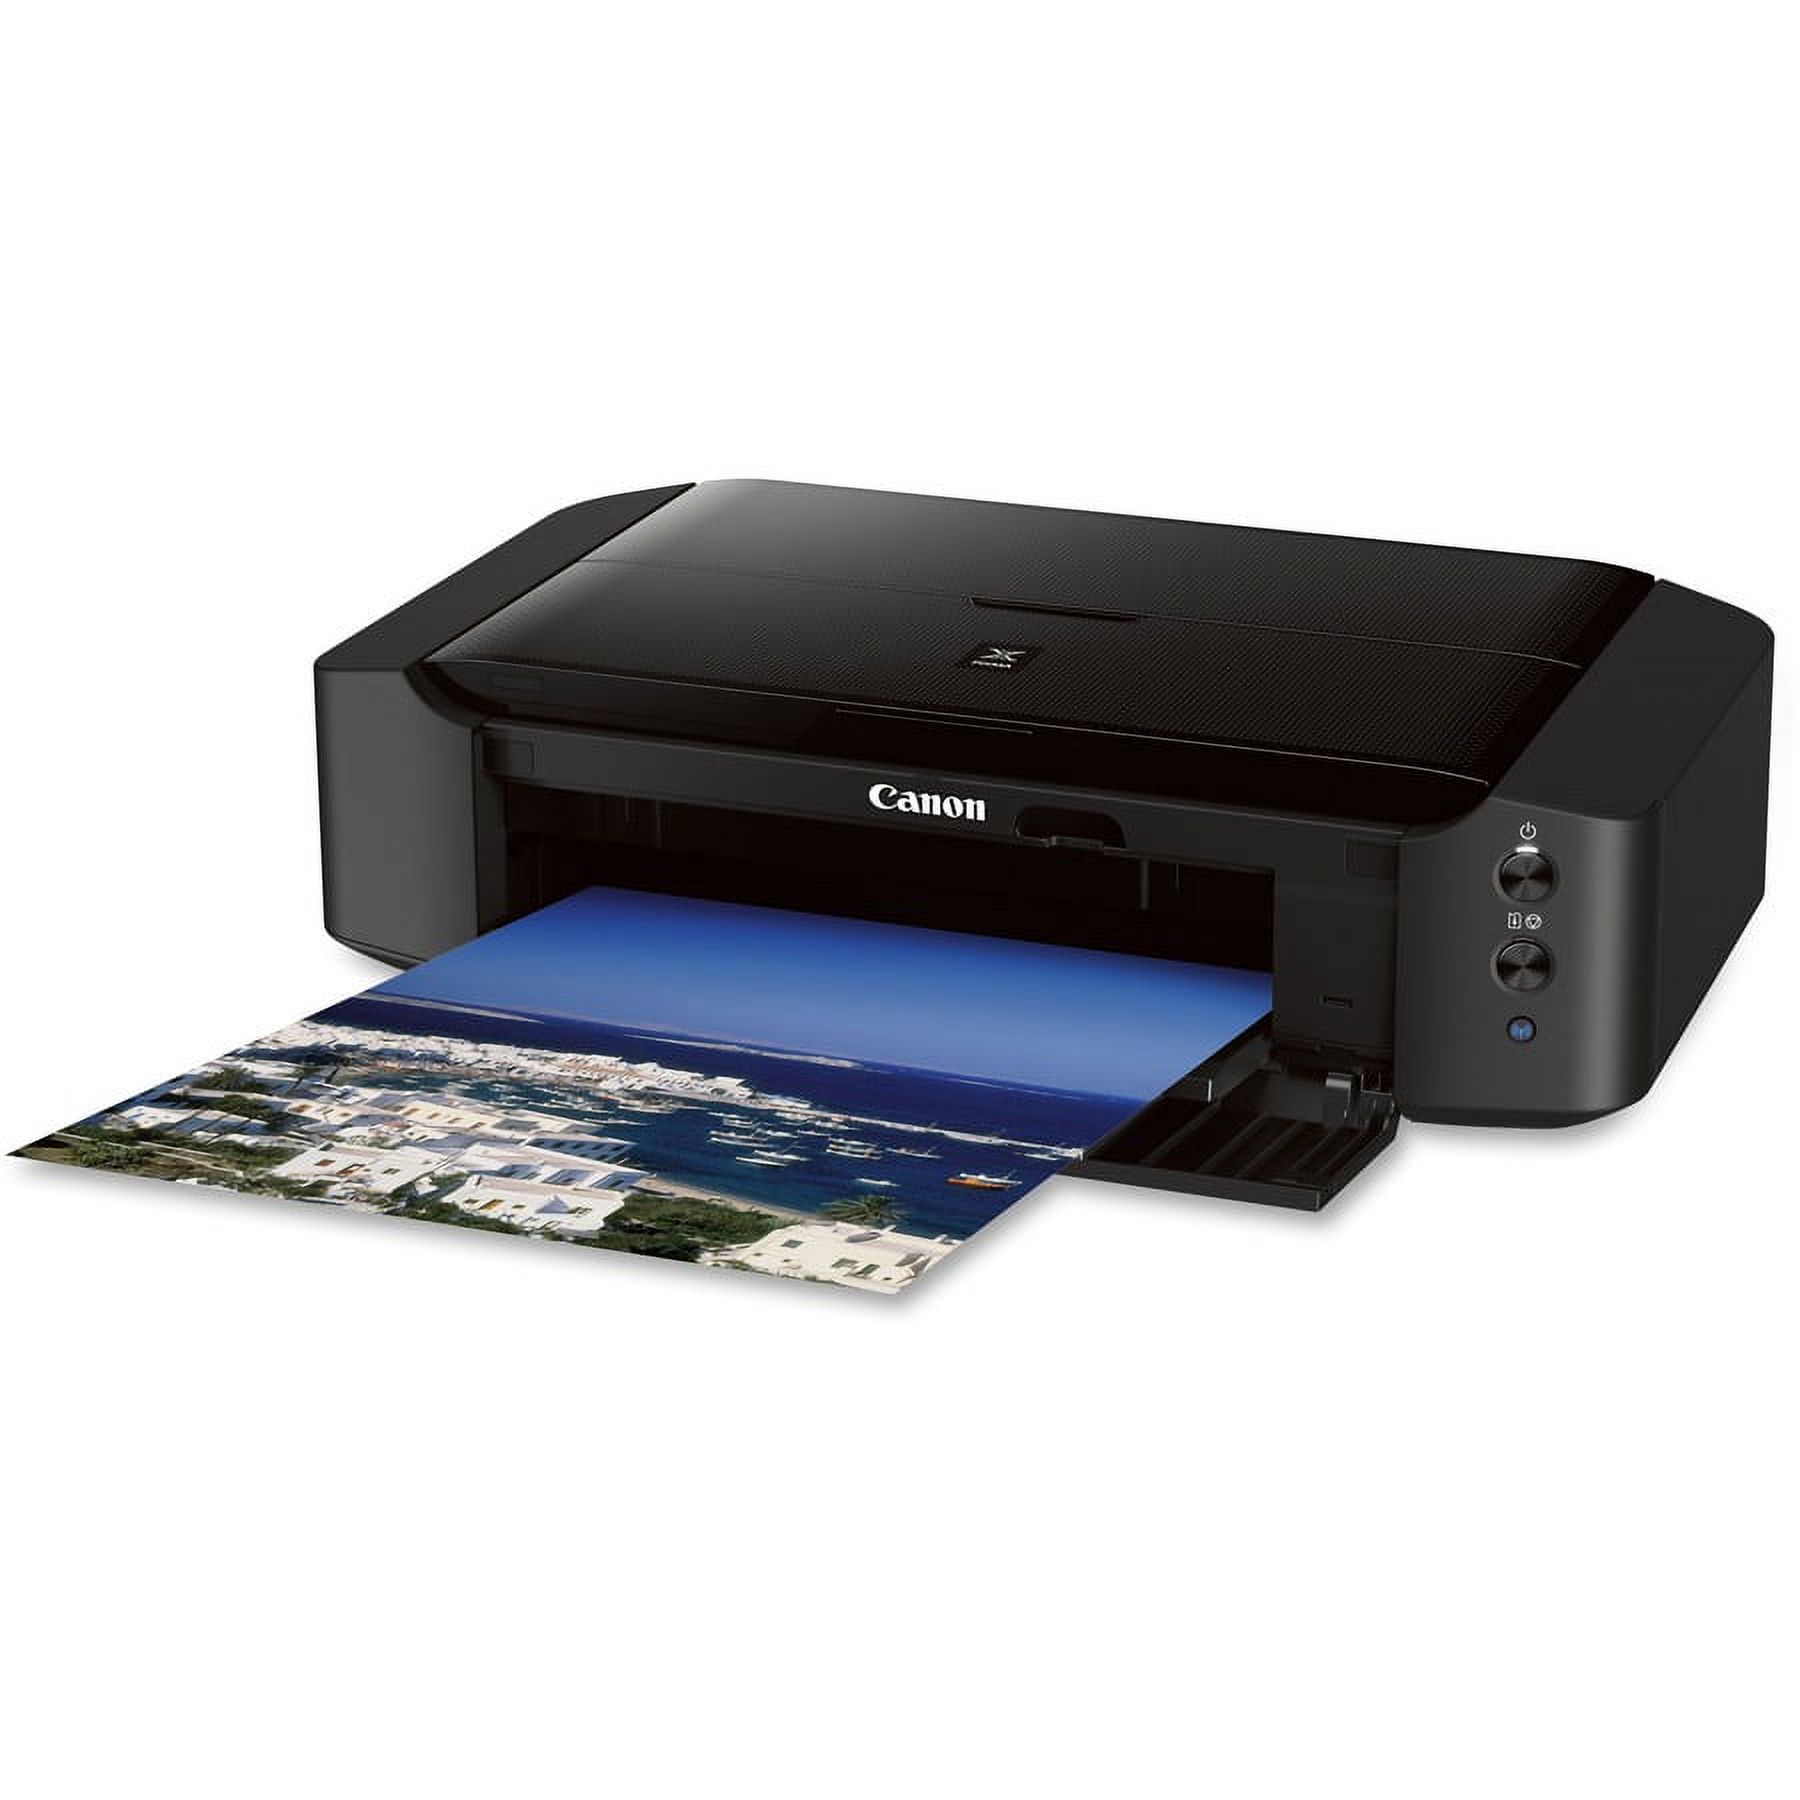 Canon Pixma iP8720 Wireless Desktop Inkjet Printer - Black - image 2 of 6